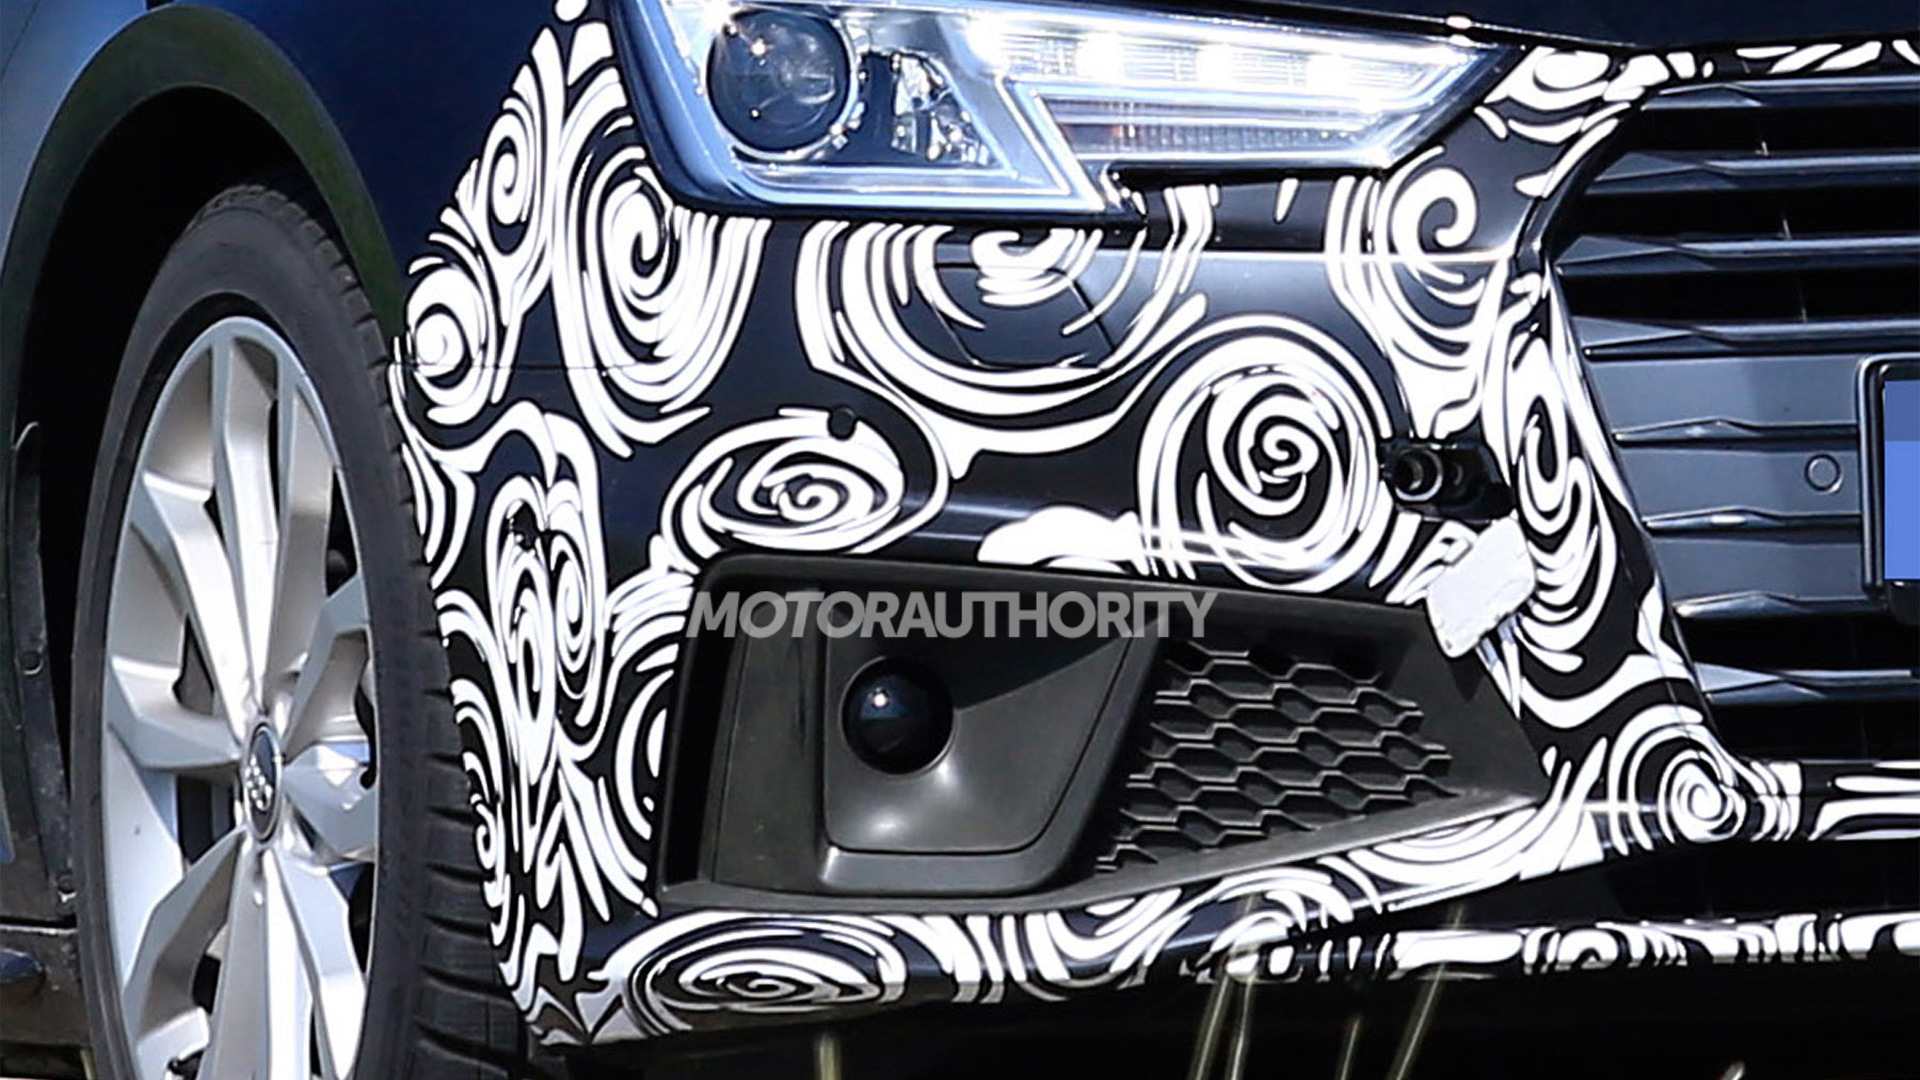 2020 Audi A4 facelift spy shots - Image via S. Baldauf/SB-Medien